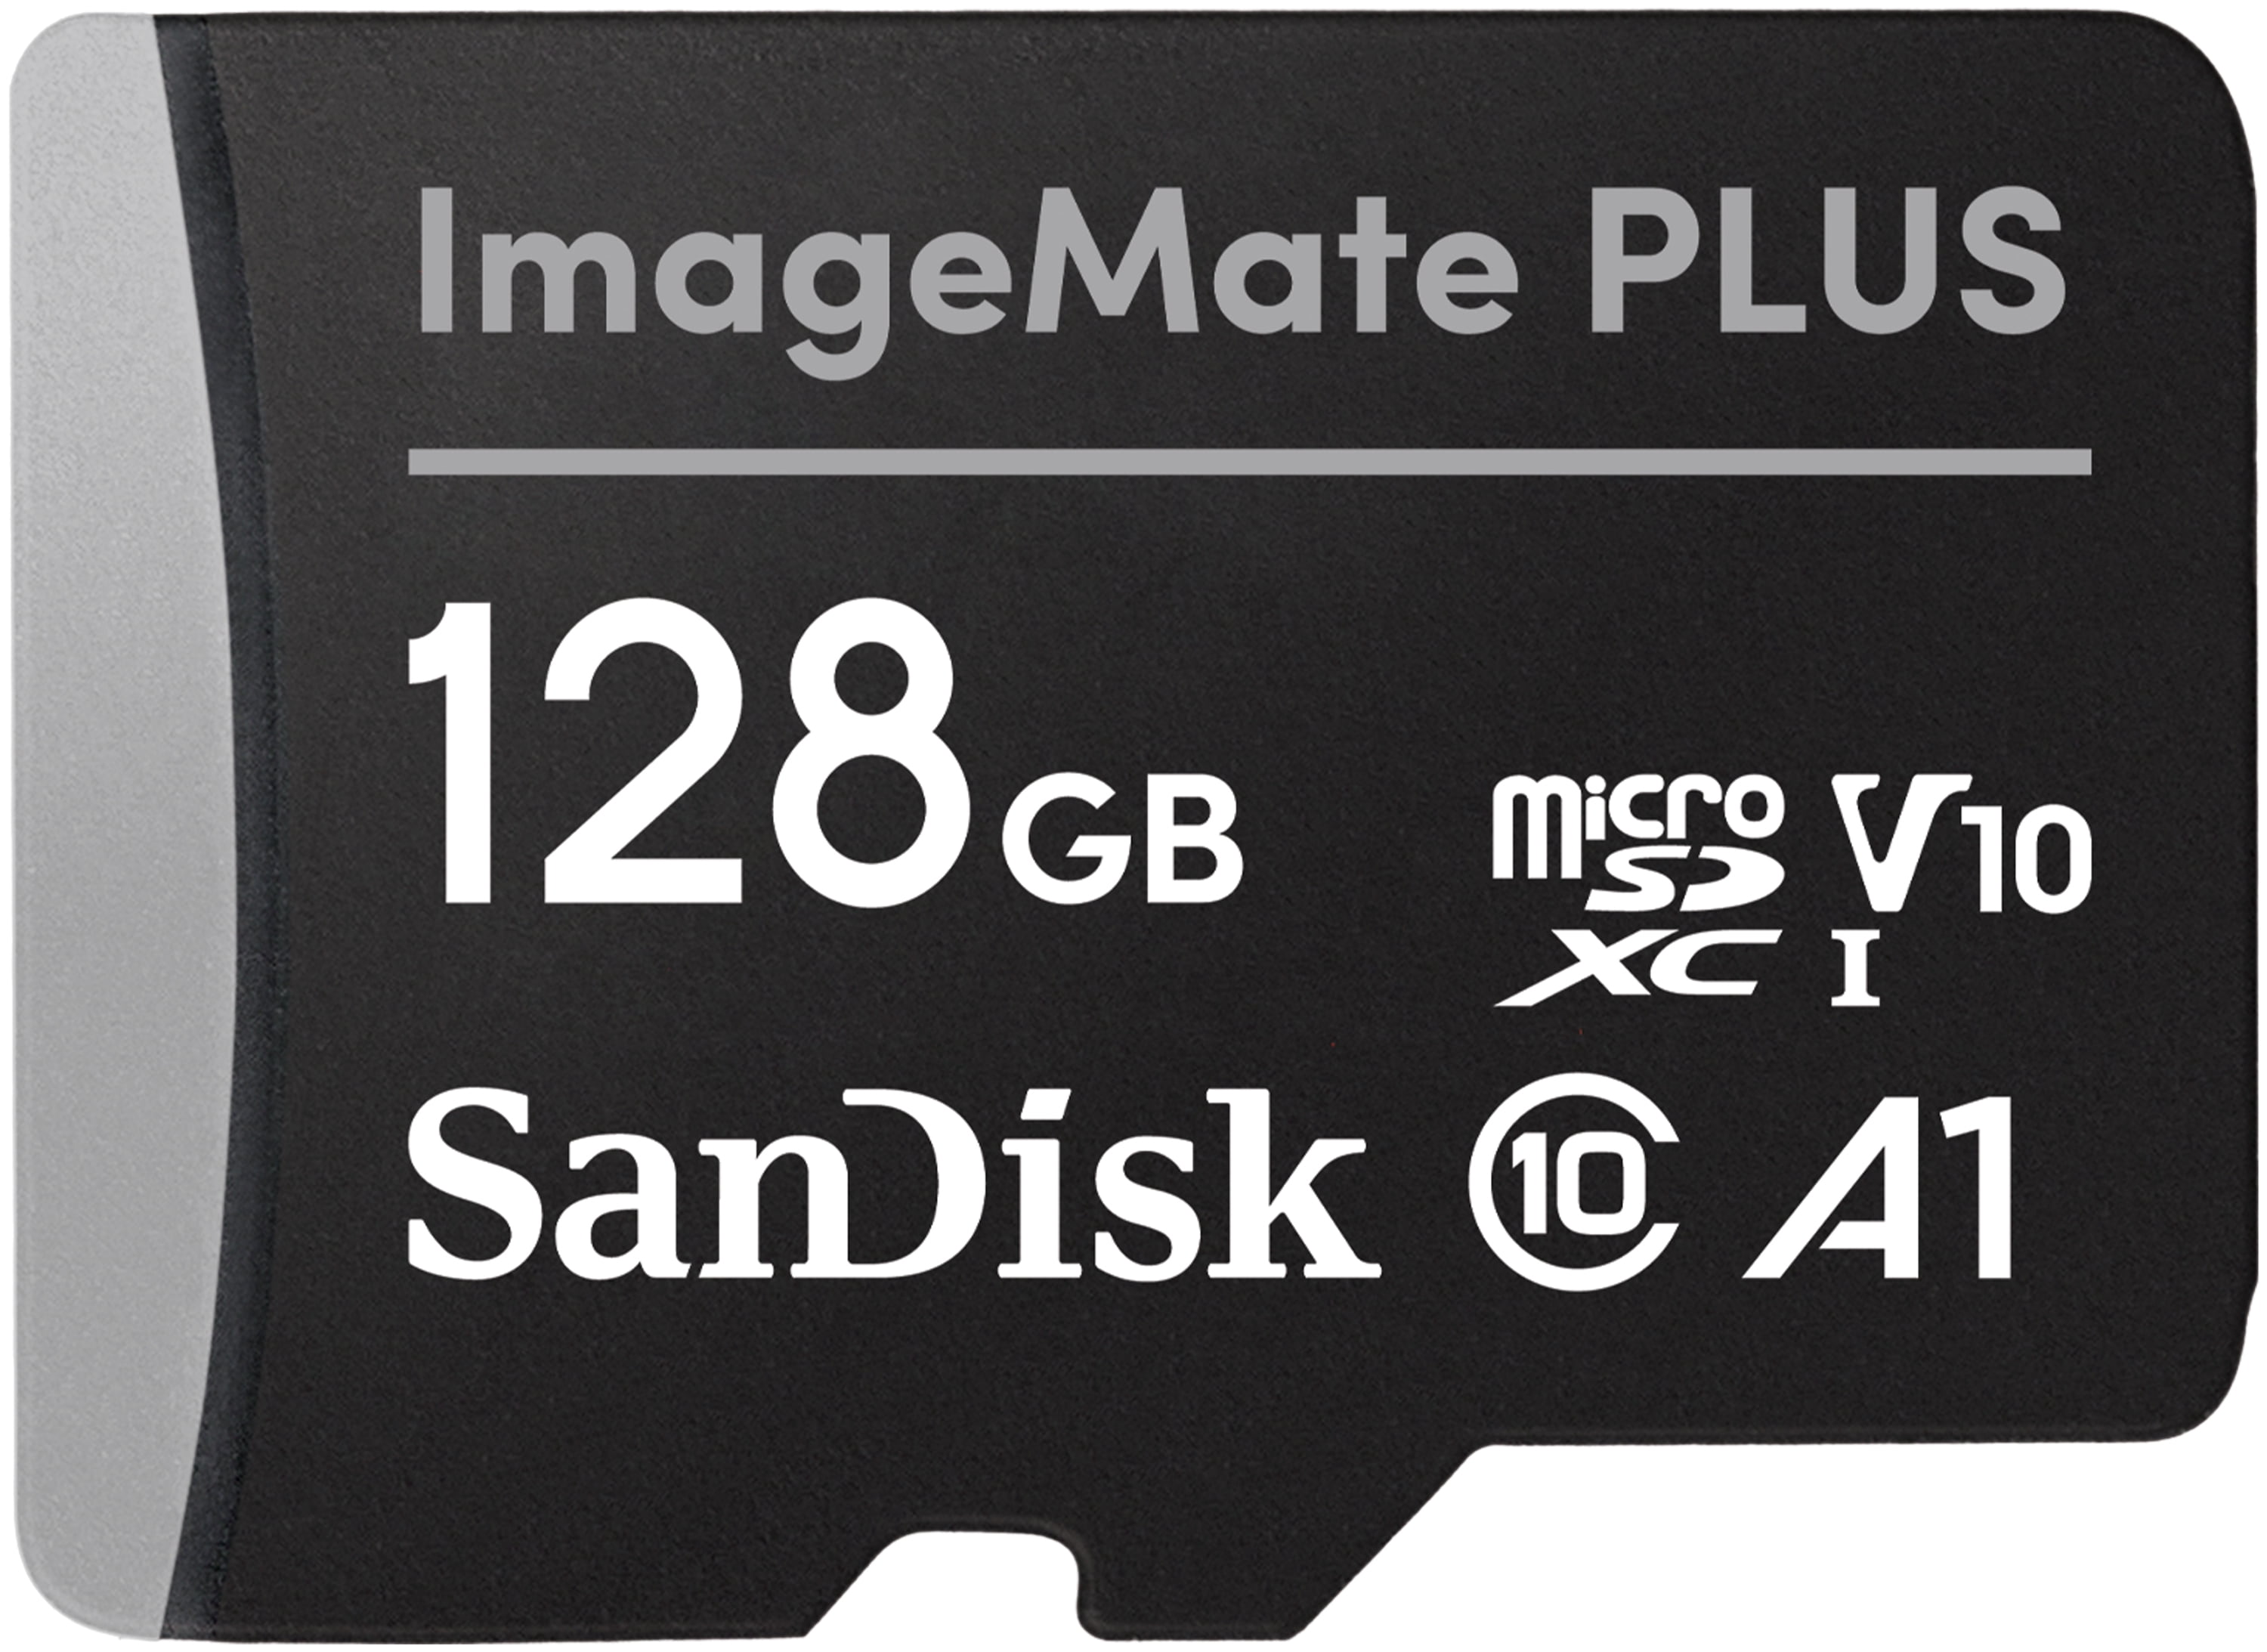 Full HD, Class 10 4GB microSDHC Memory Card for Kodak EasyShare V1003